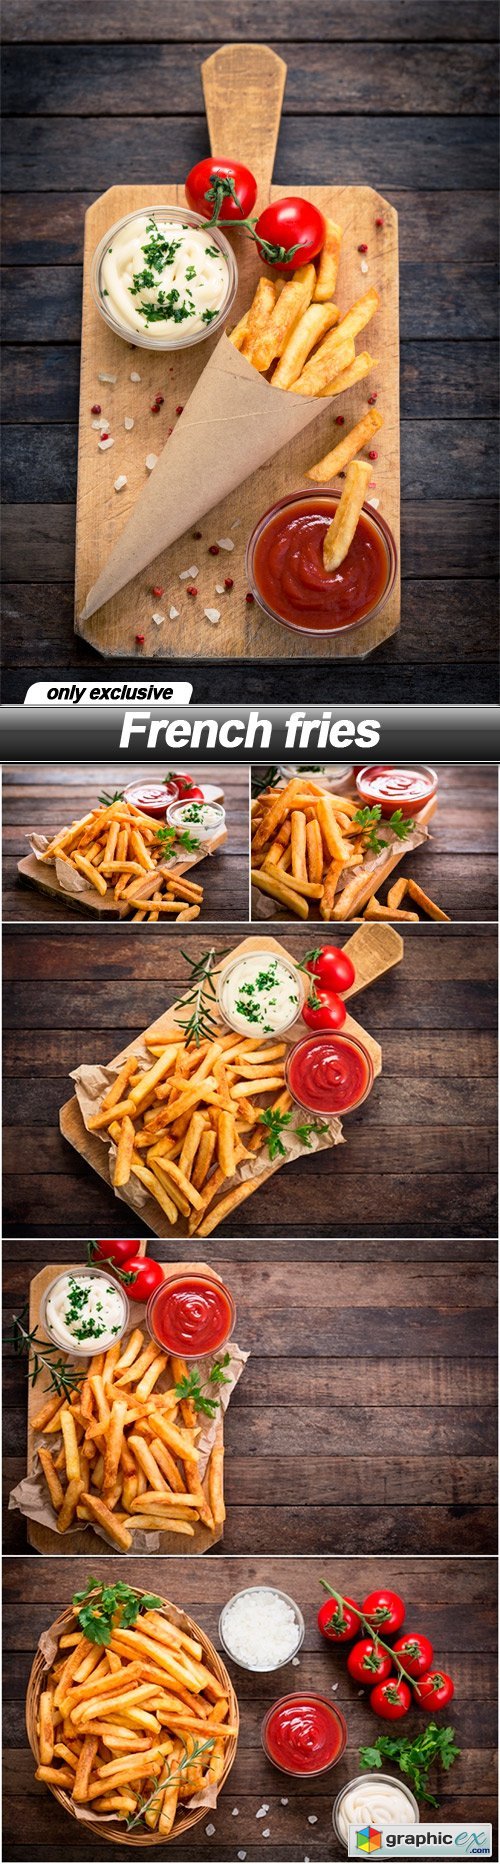 French fries - 6 UHQ JPEG